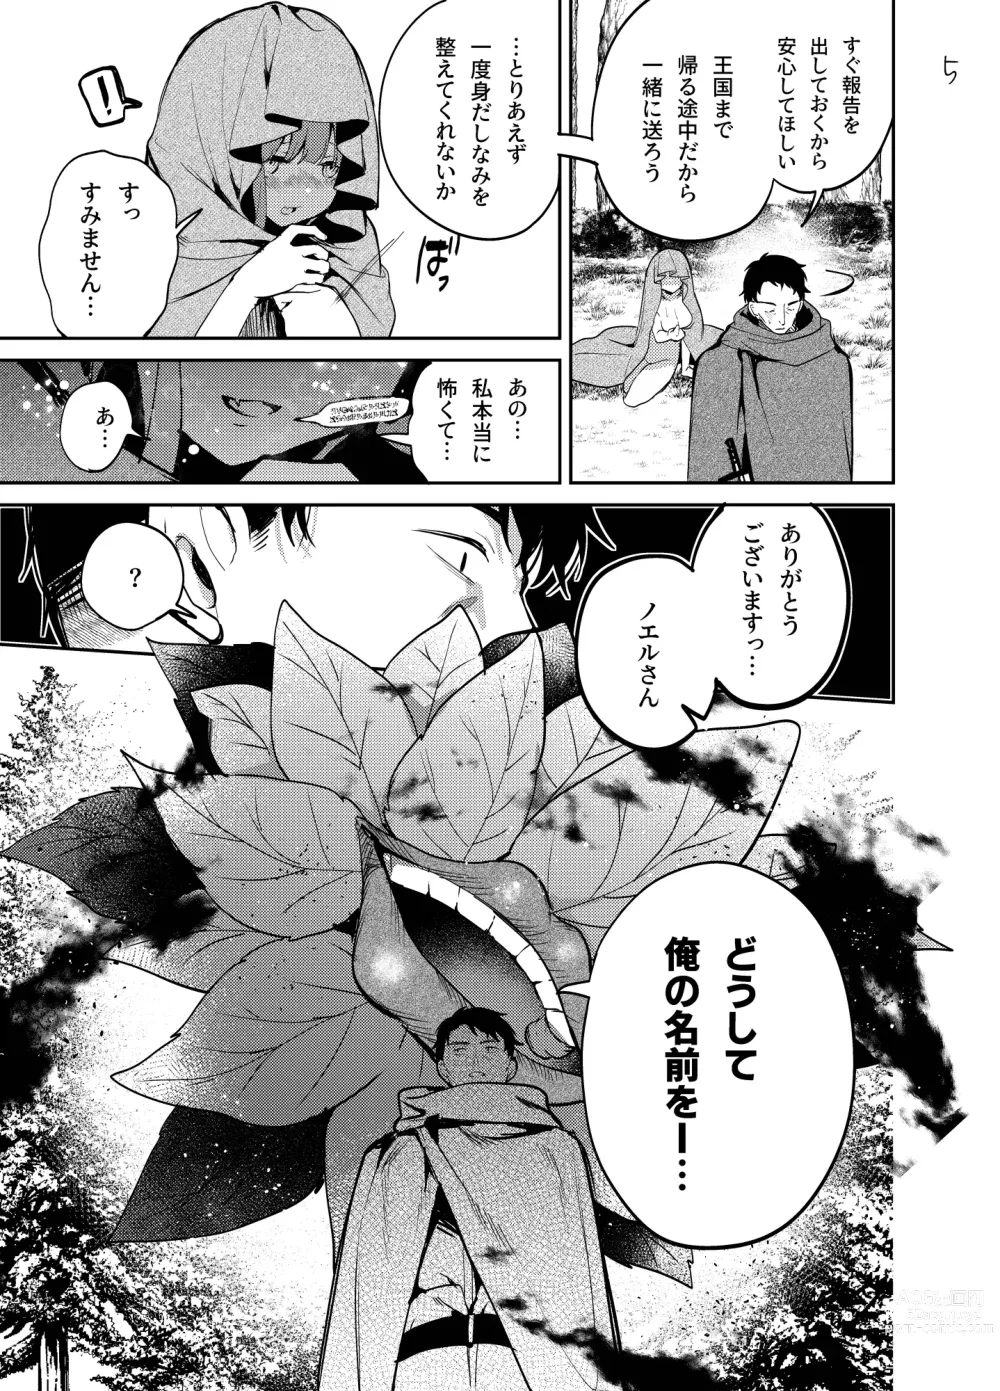 Page 5 of doujinshi Nightmare Before Christmas